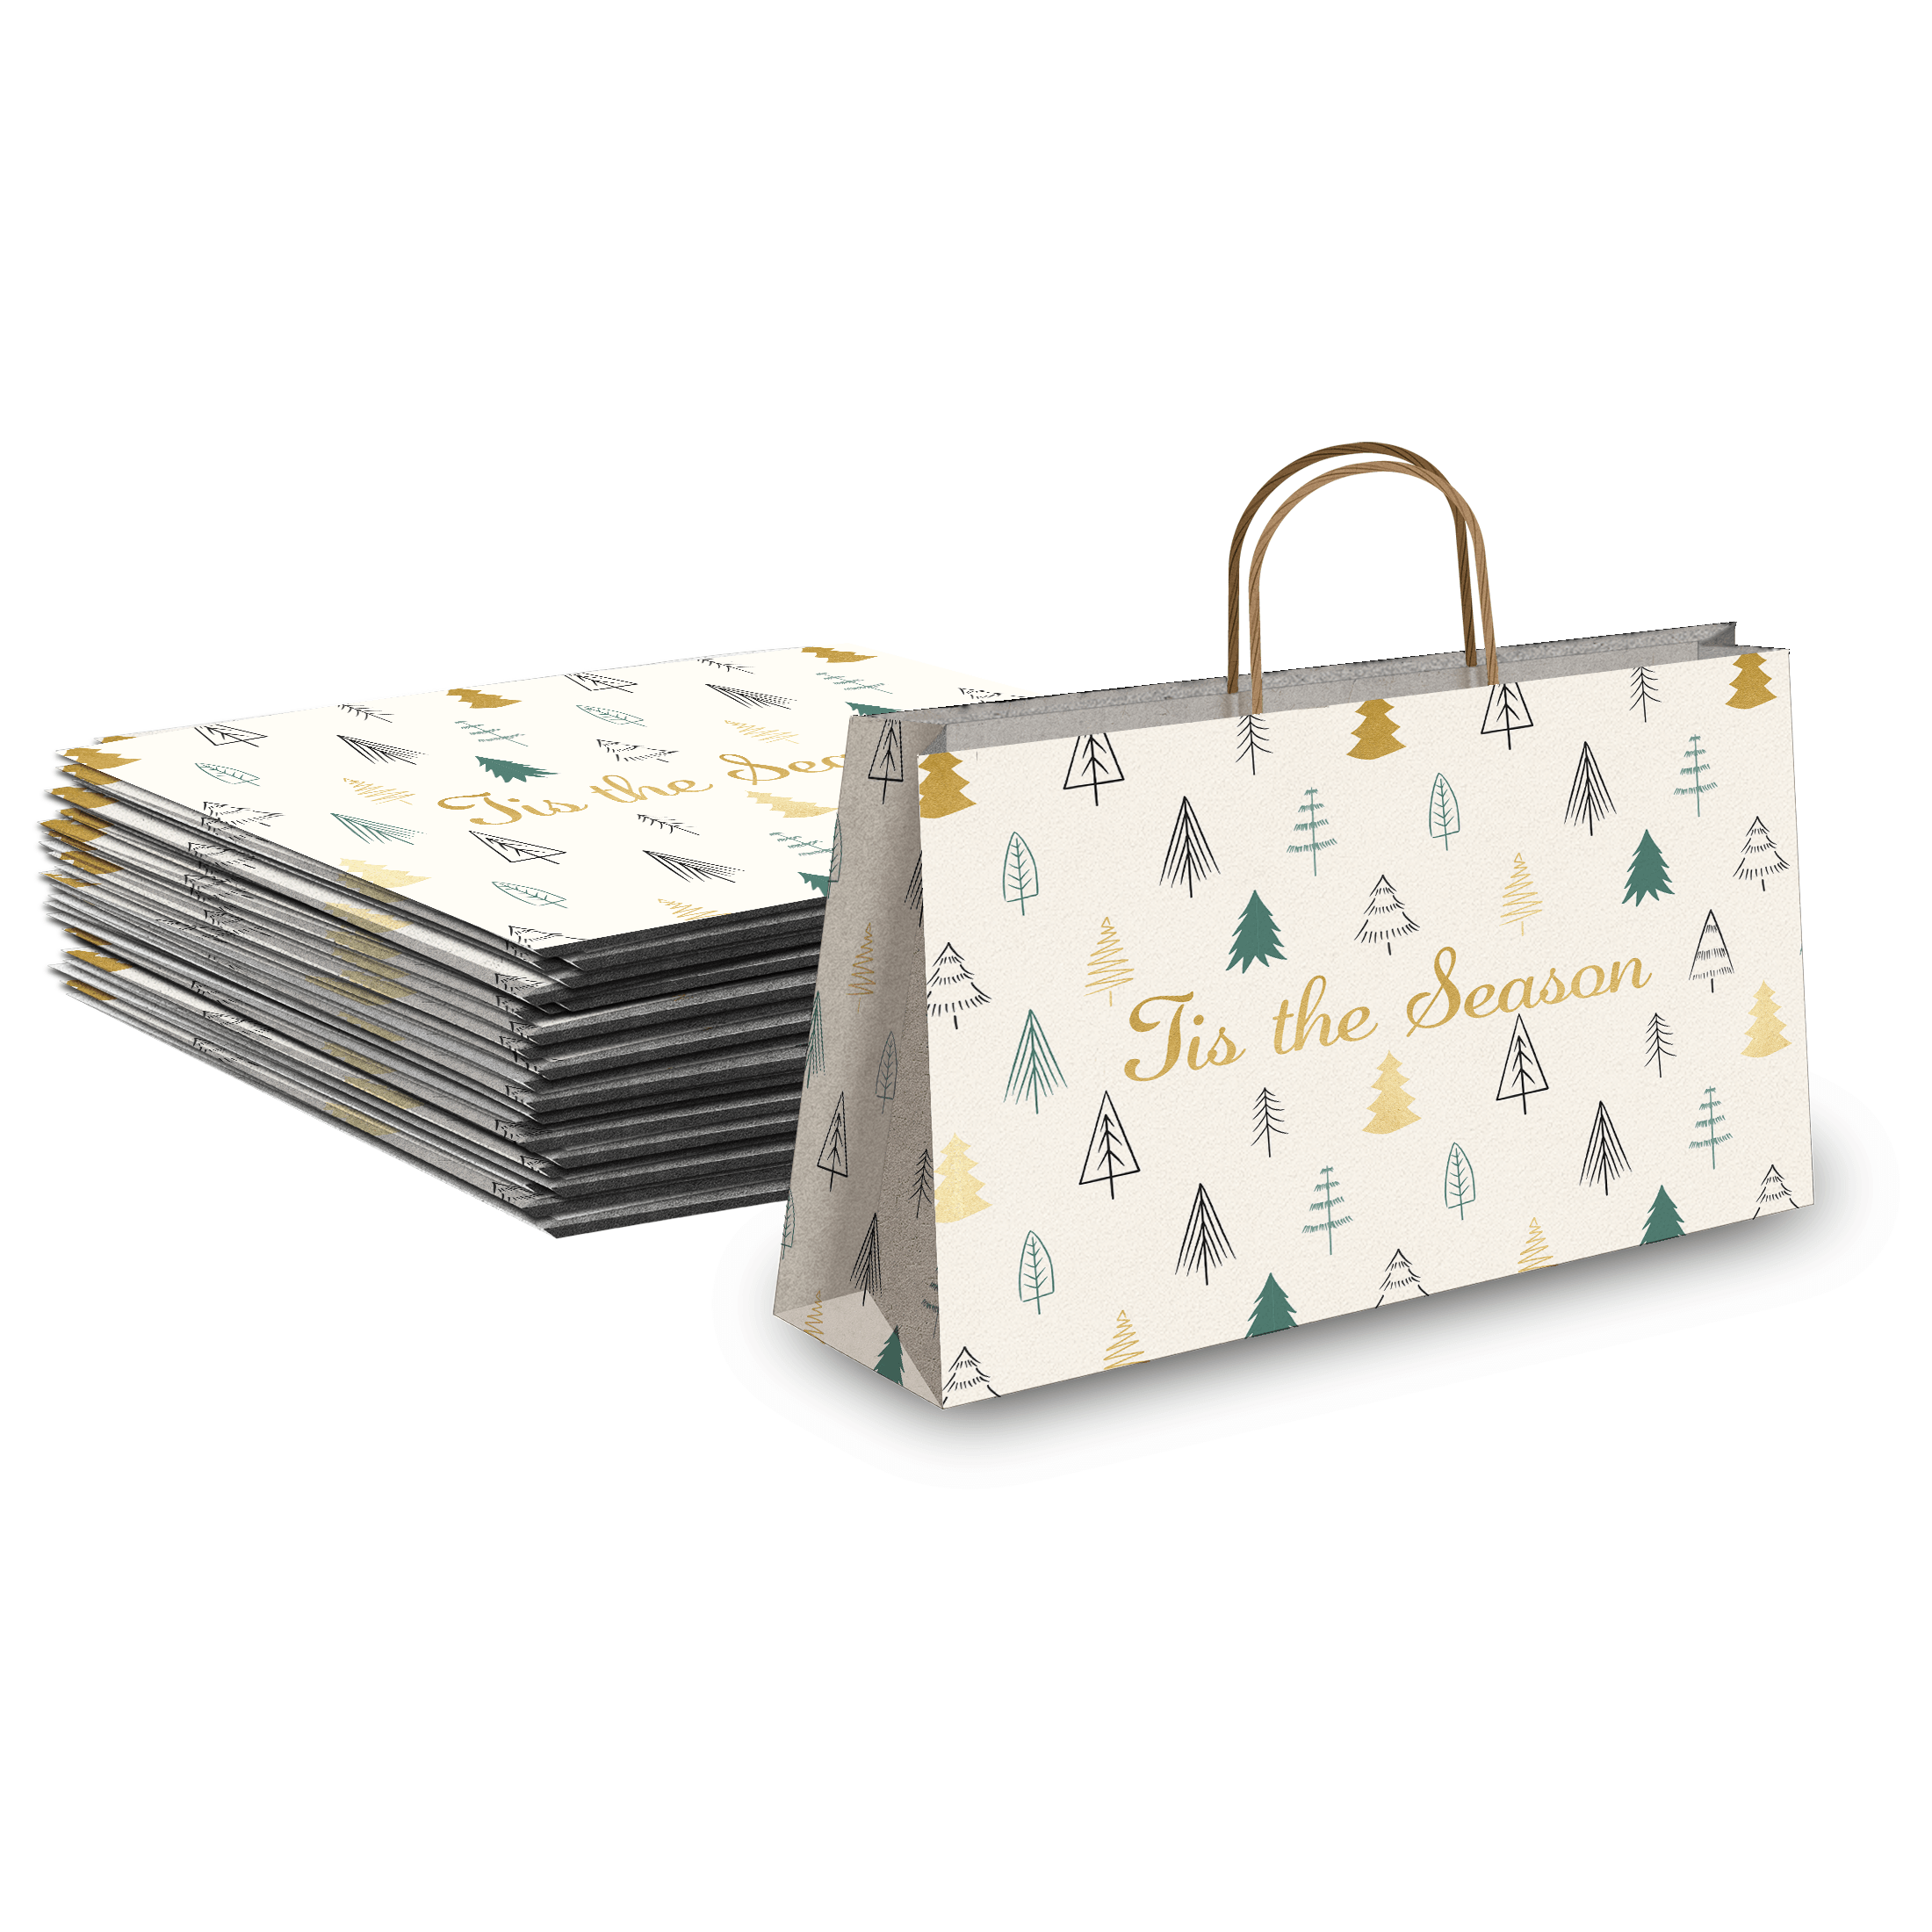 Fir Tree Season Printed Designer Kraft Paper Shopping Bags Pro Supply Global